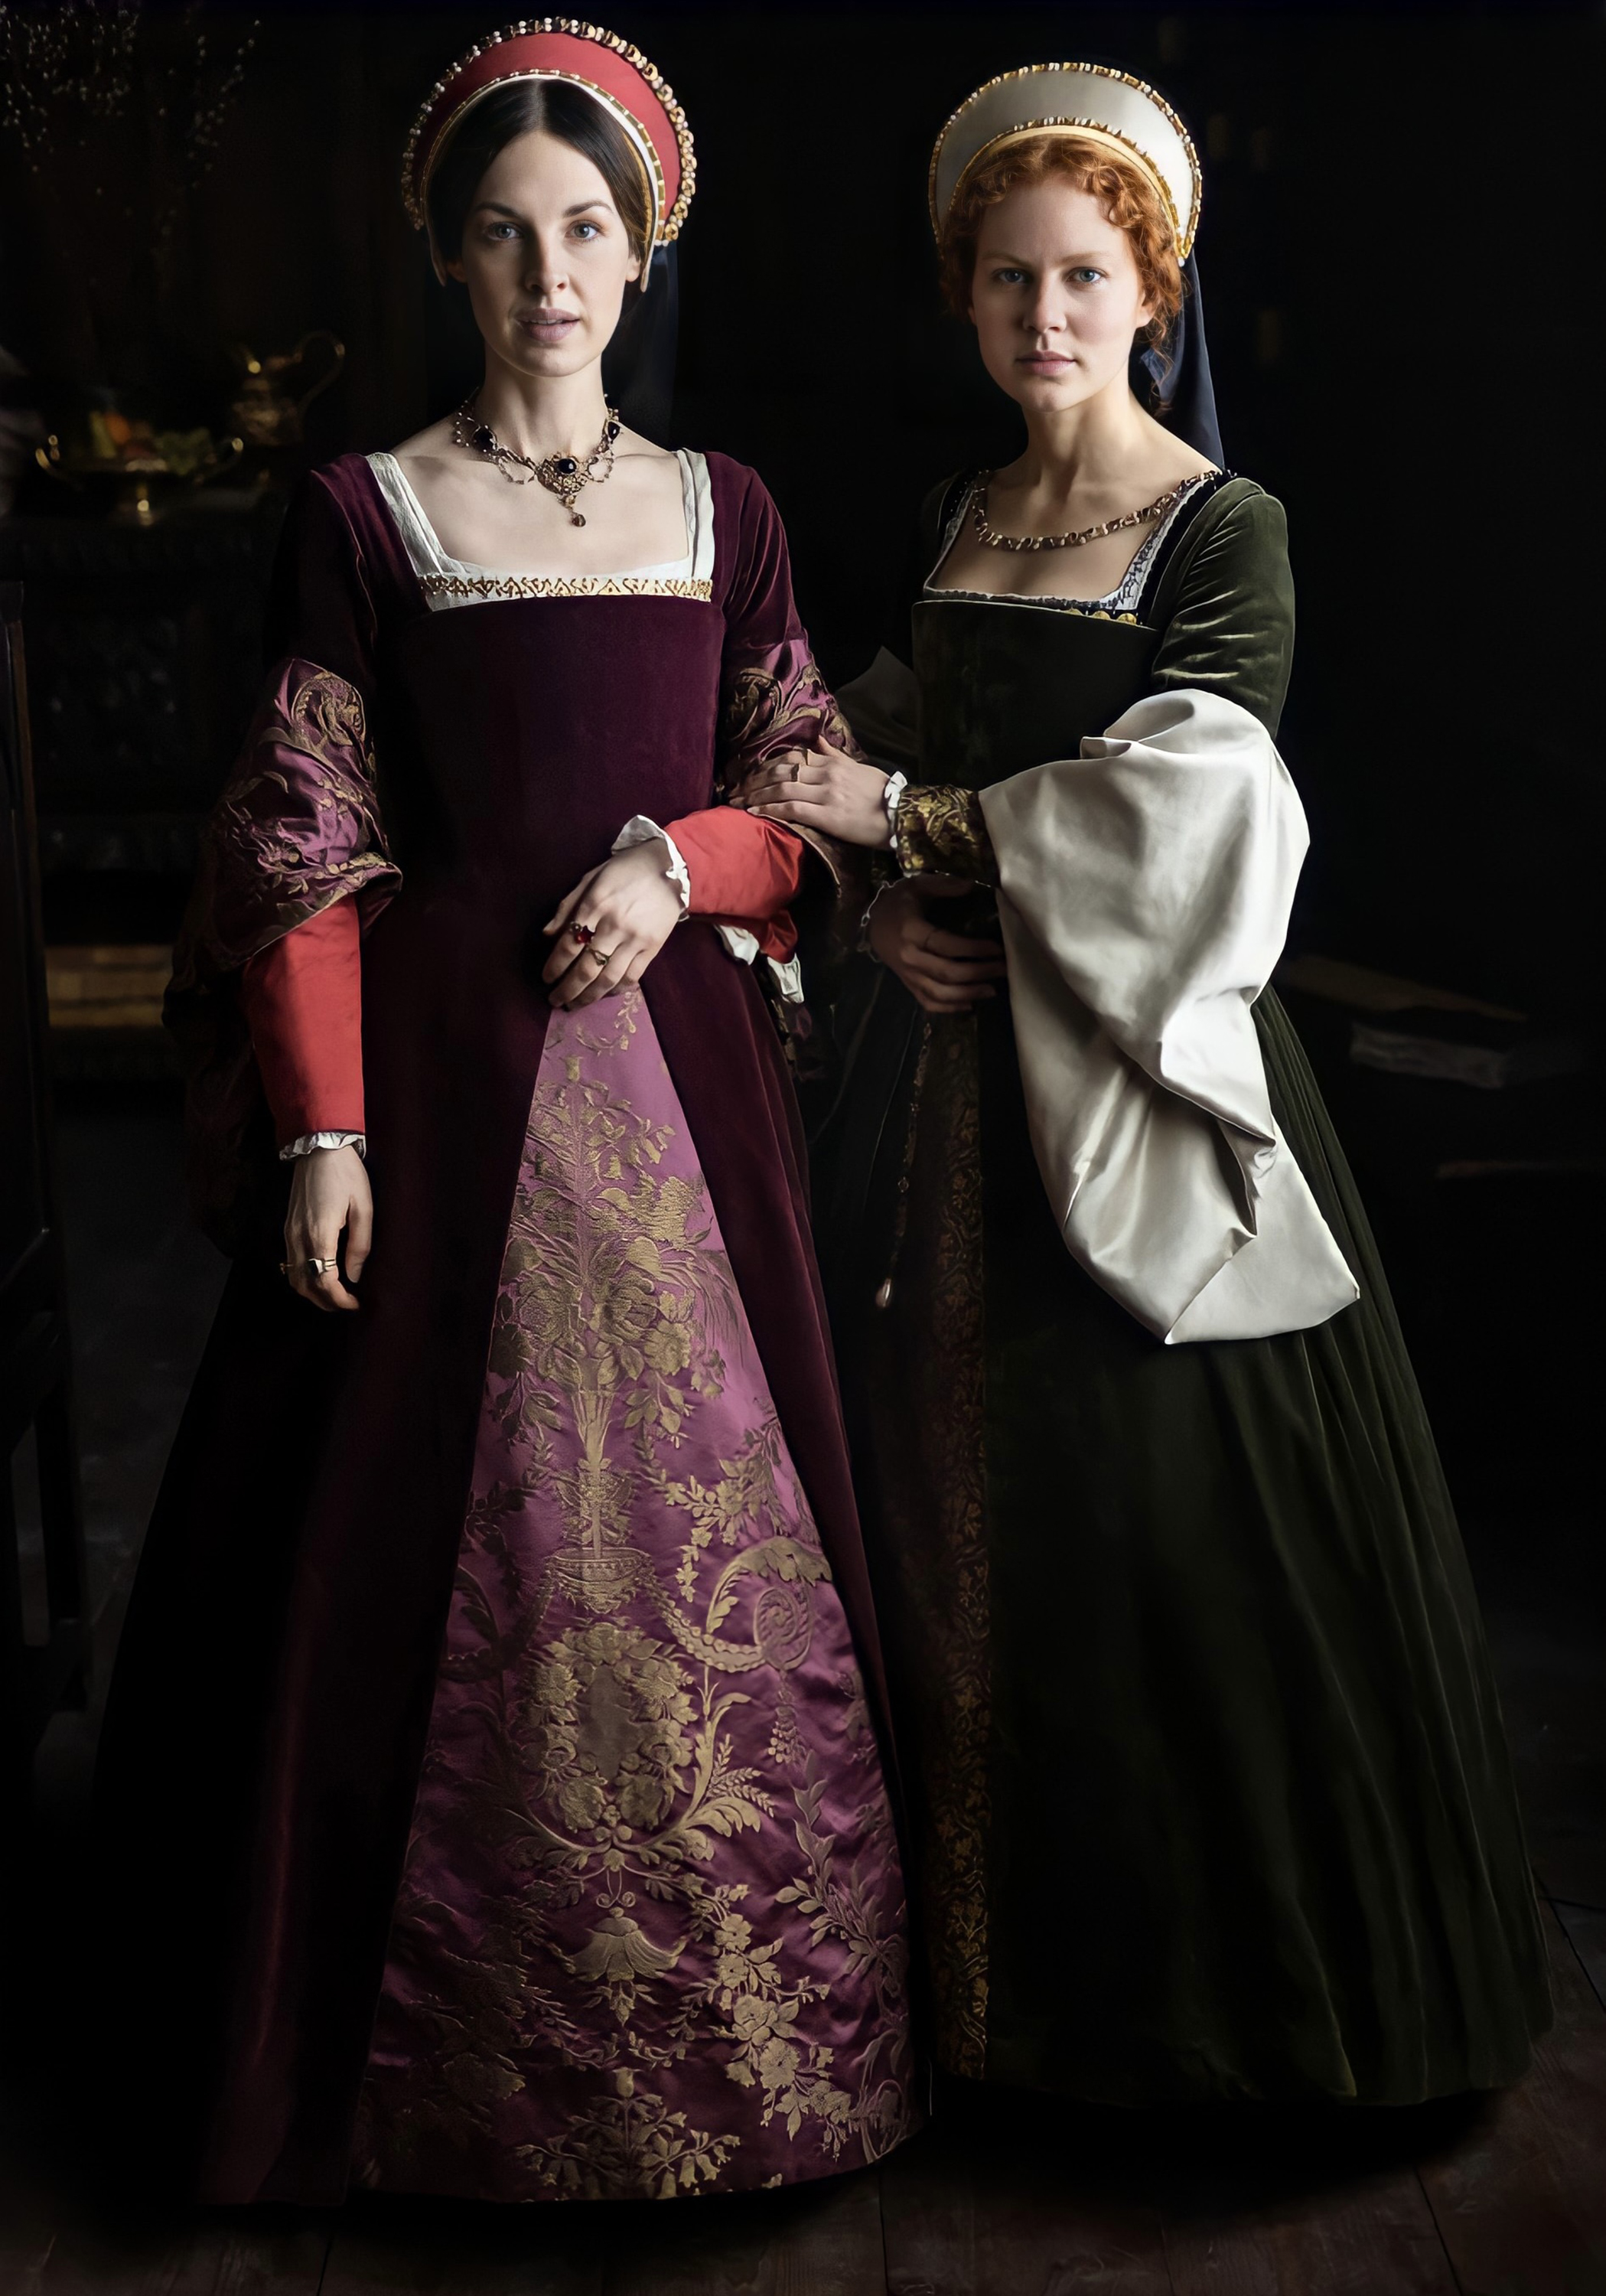 Jessica Raine and Alicia von Rittberg in “Becoming Elizabeth”